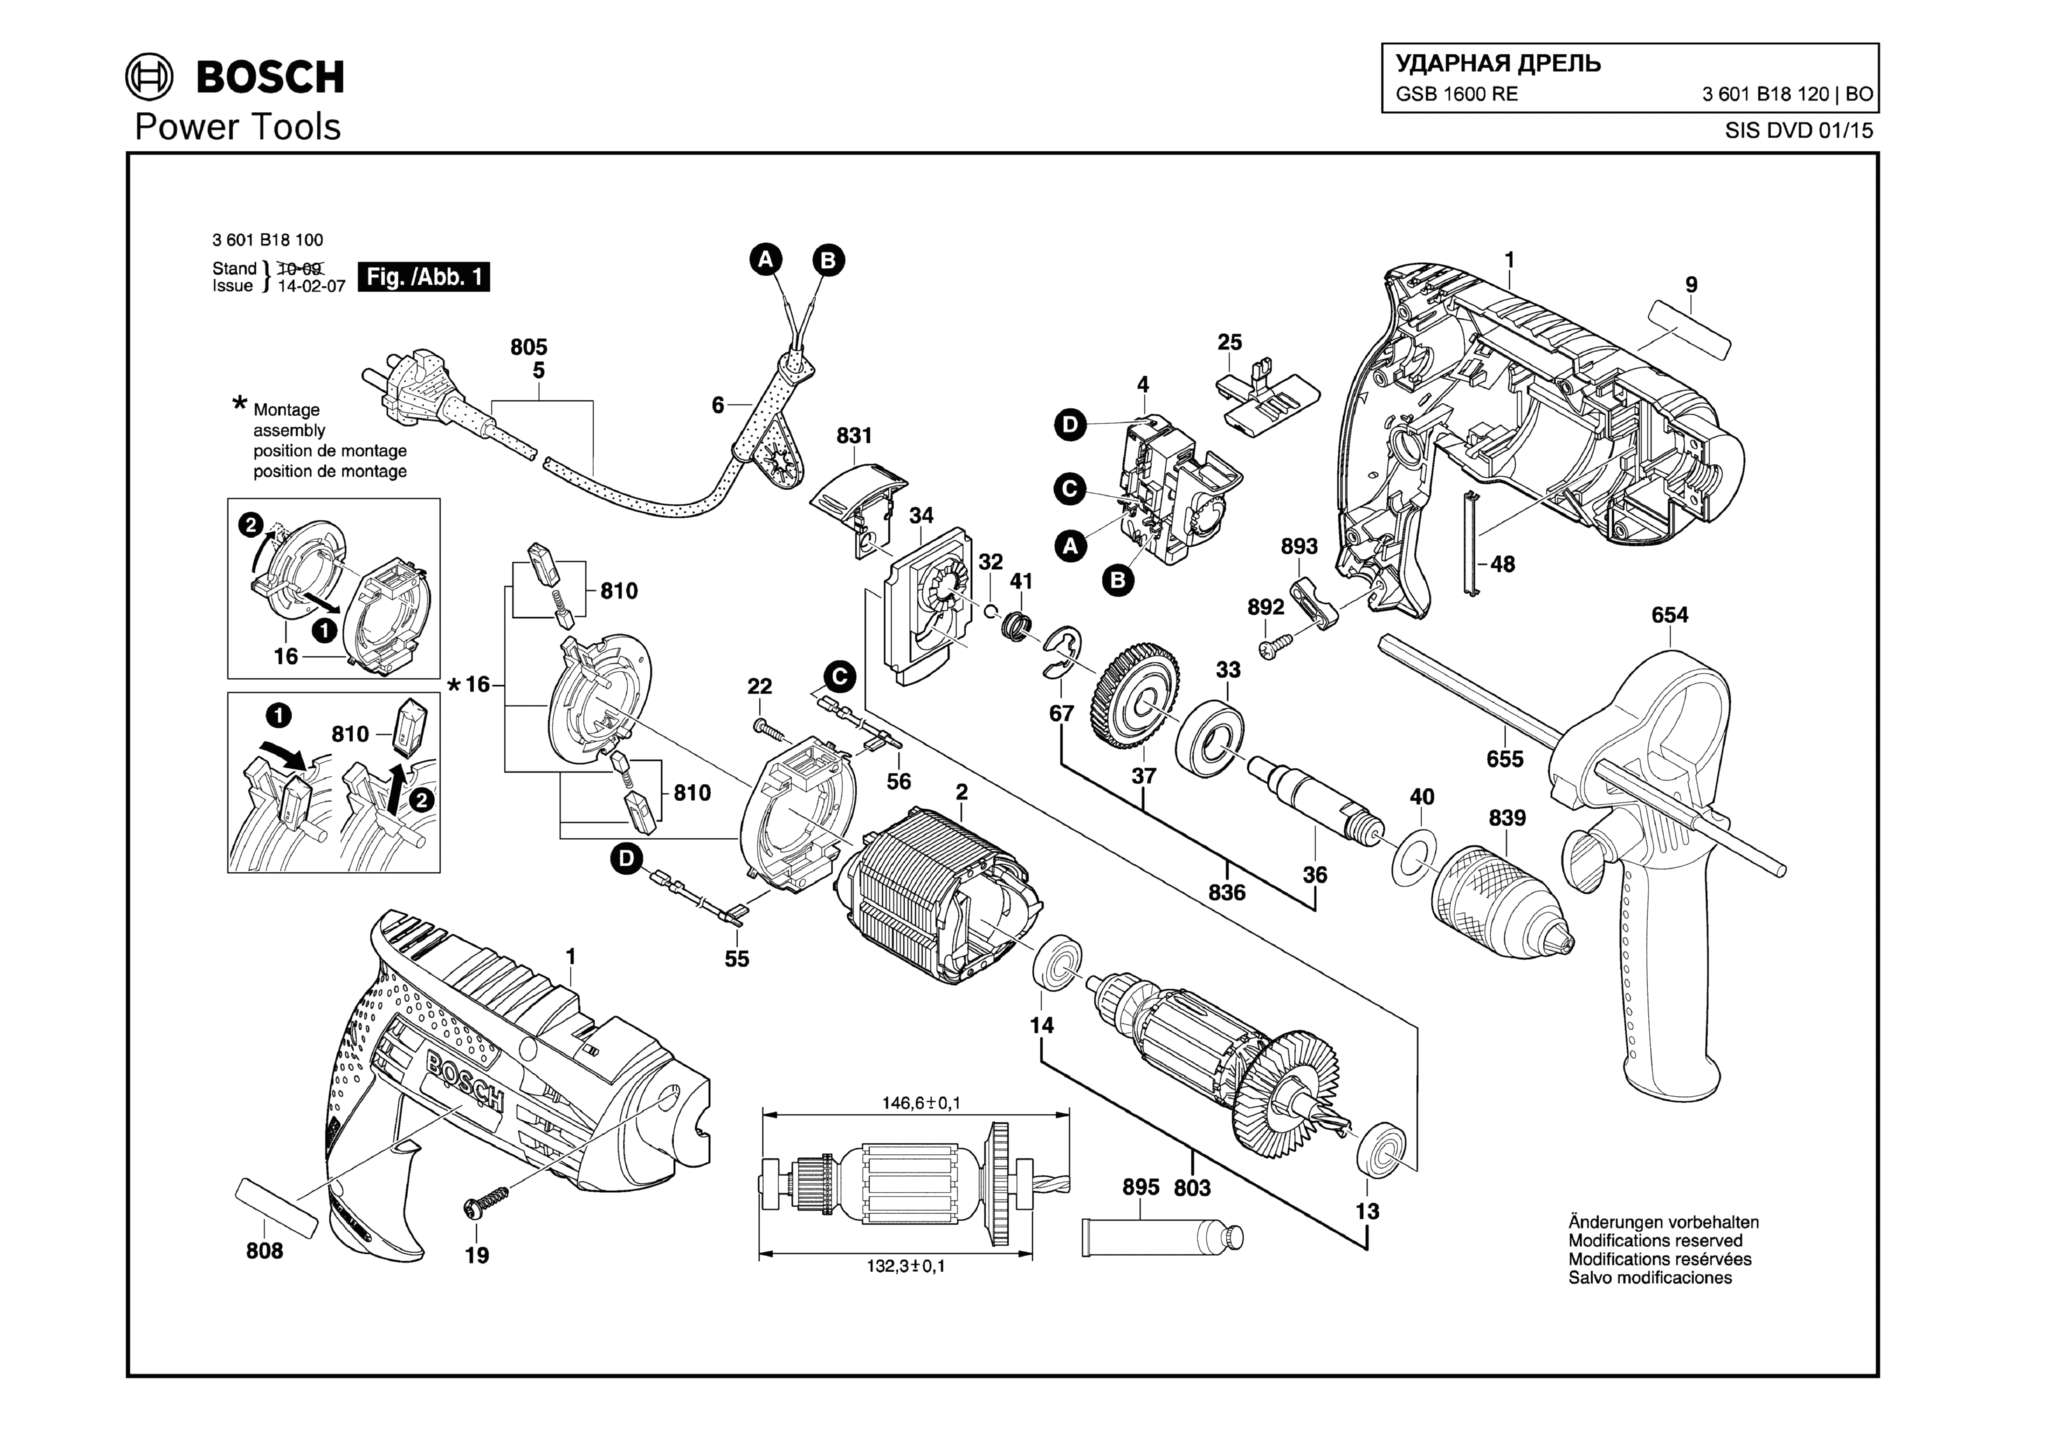 Запчасти, схема и деталировка Bosch GSB 1600 RE (ТИП 3601B18120)